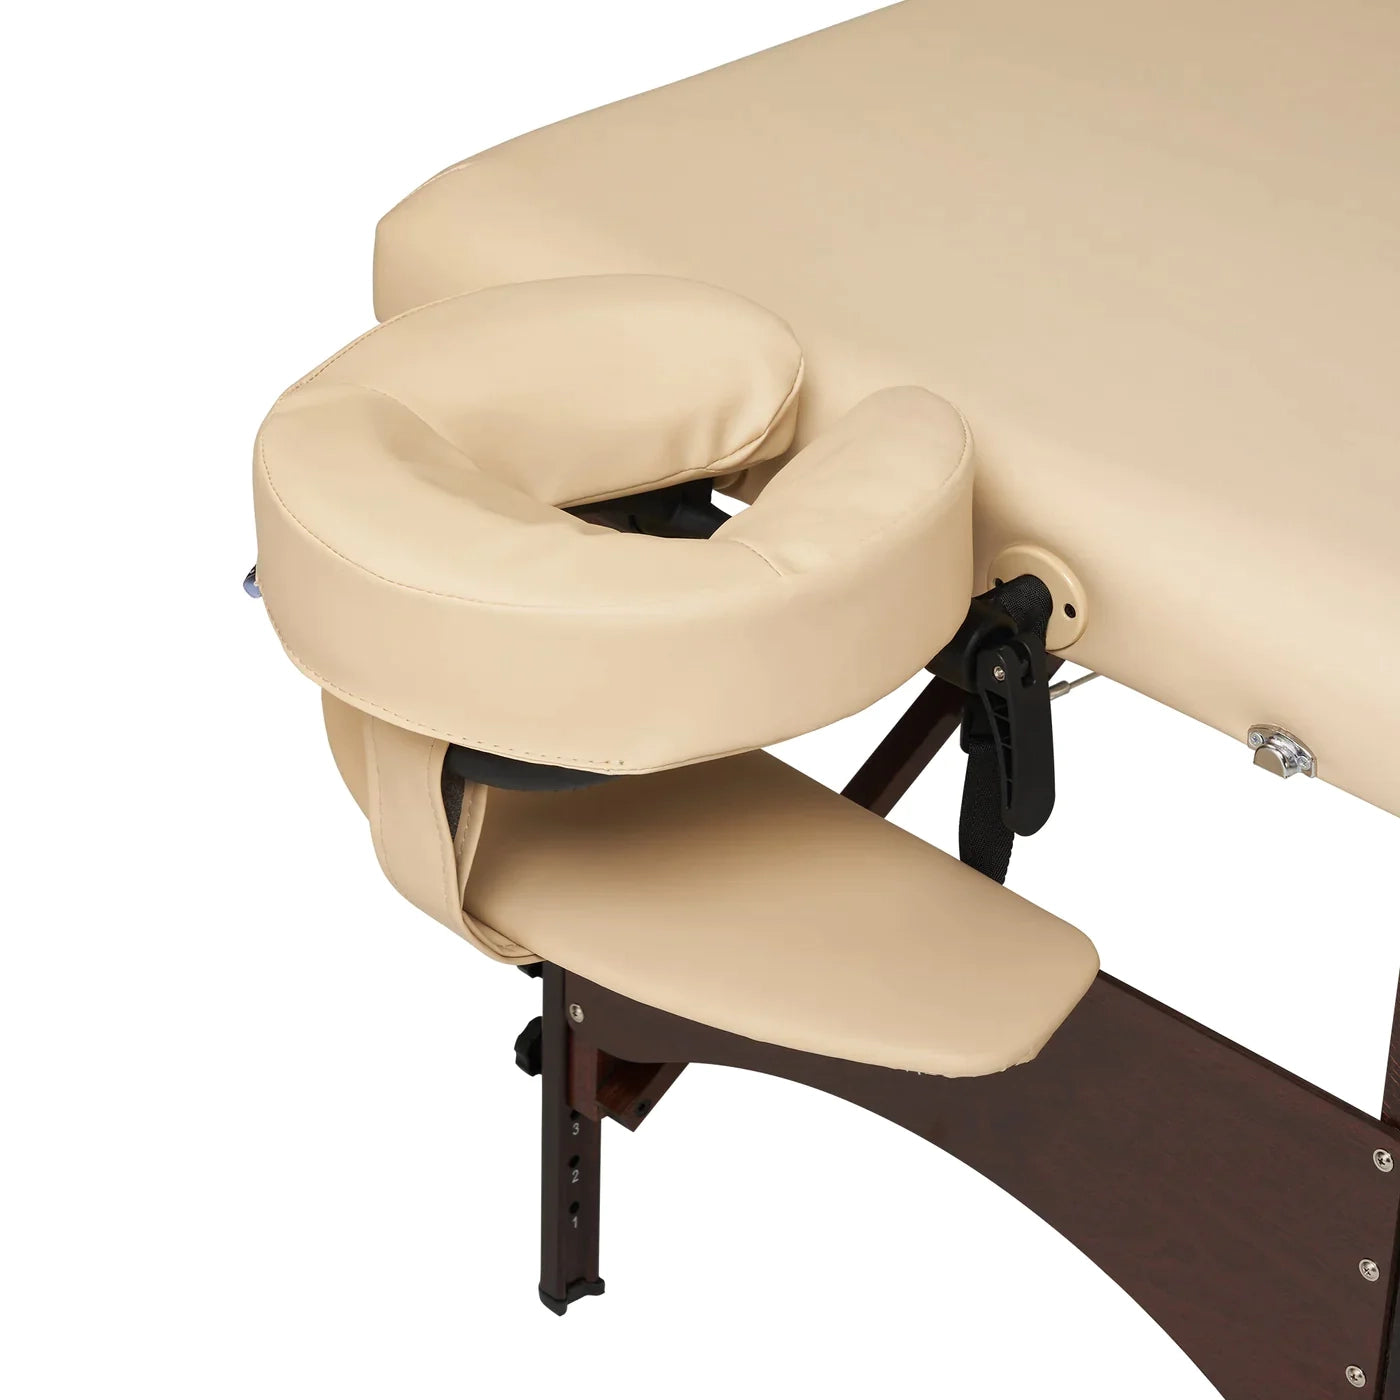 Bella2bello 28" Argo Portable Massage Table Package